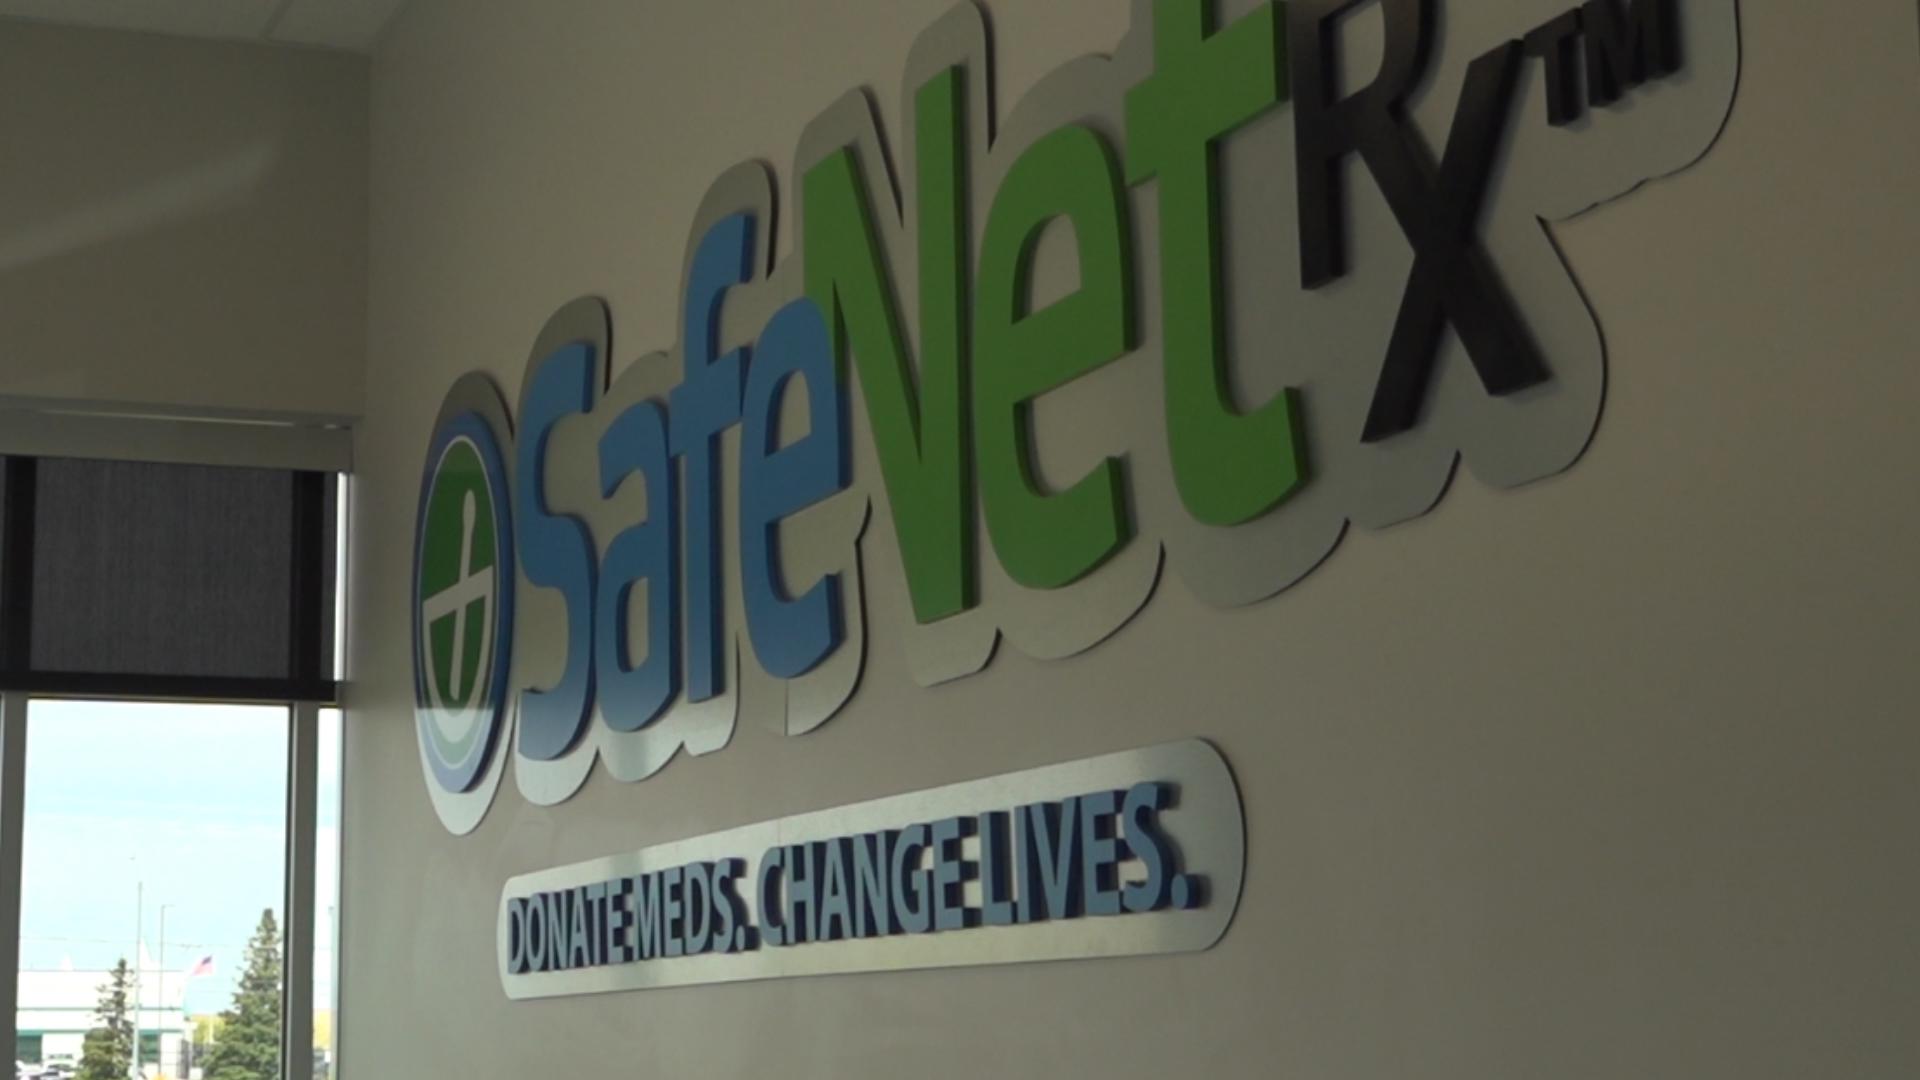 Last month, Nebraska Gov. Jim Pillen signed a bill that will allow SafeNetRx to distribute donated drugs across the Iowa-Nebraska border.